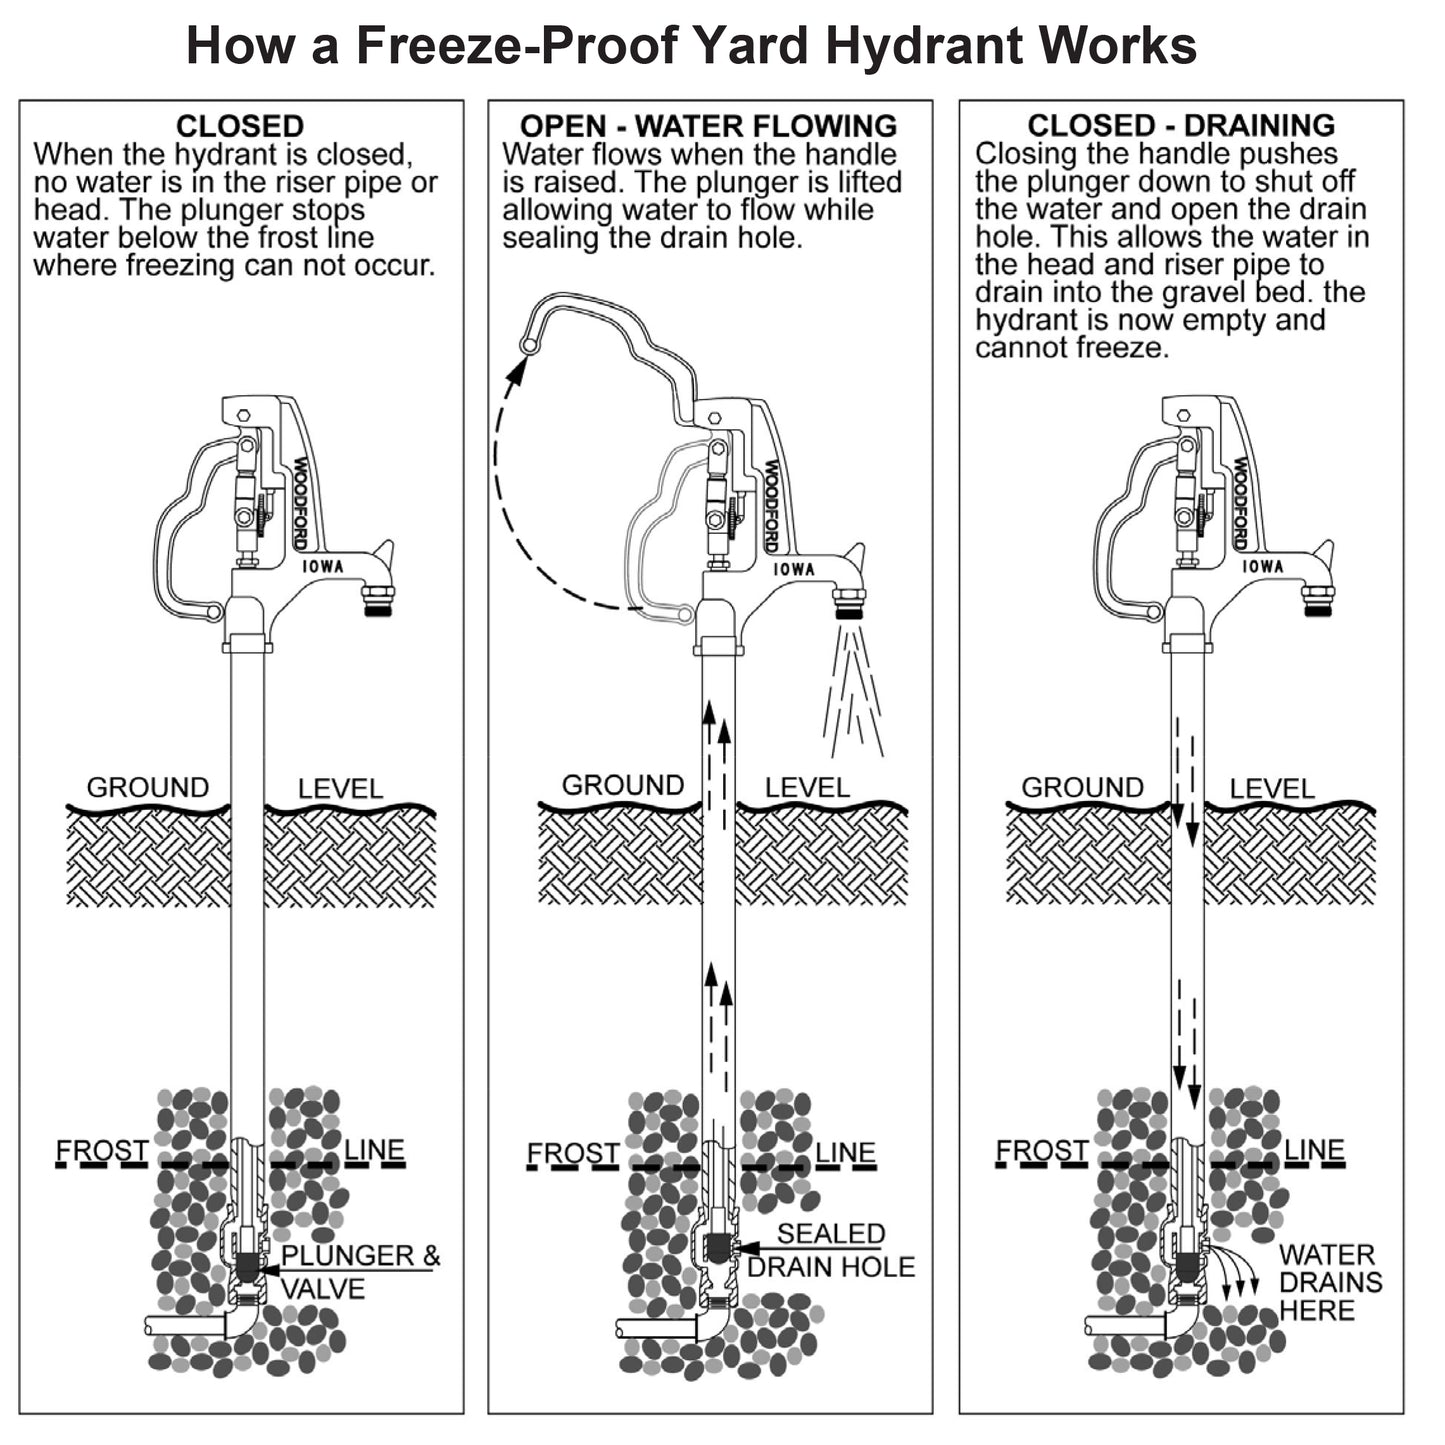 Woodford Y34 - 3/4" Inlet Iowa Freezeless Yard Hydrant